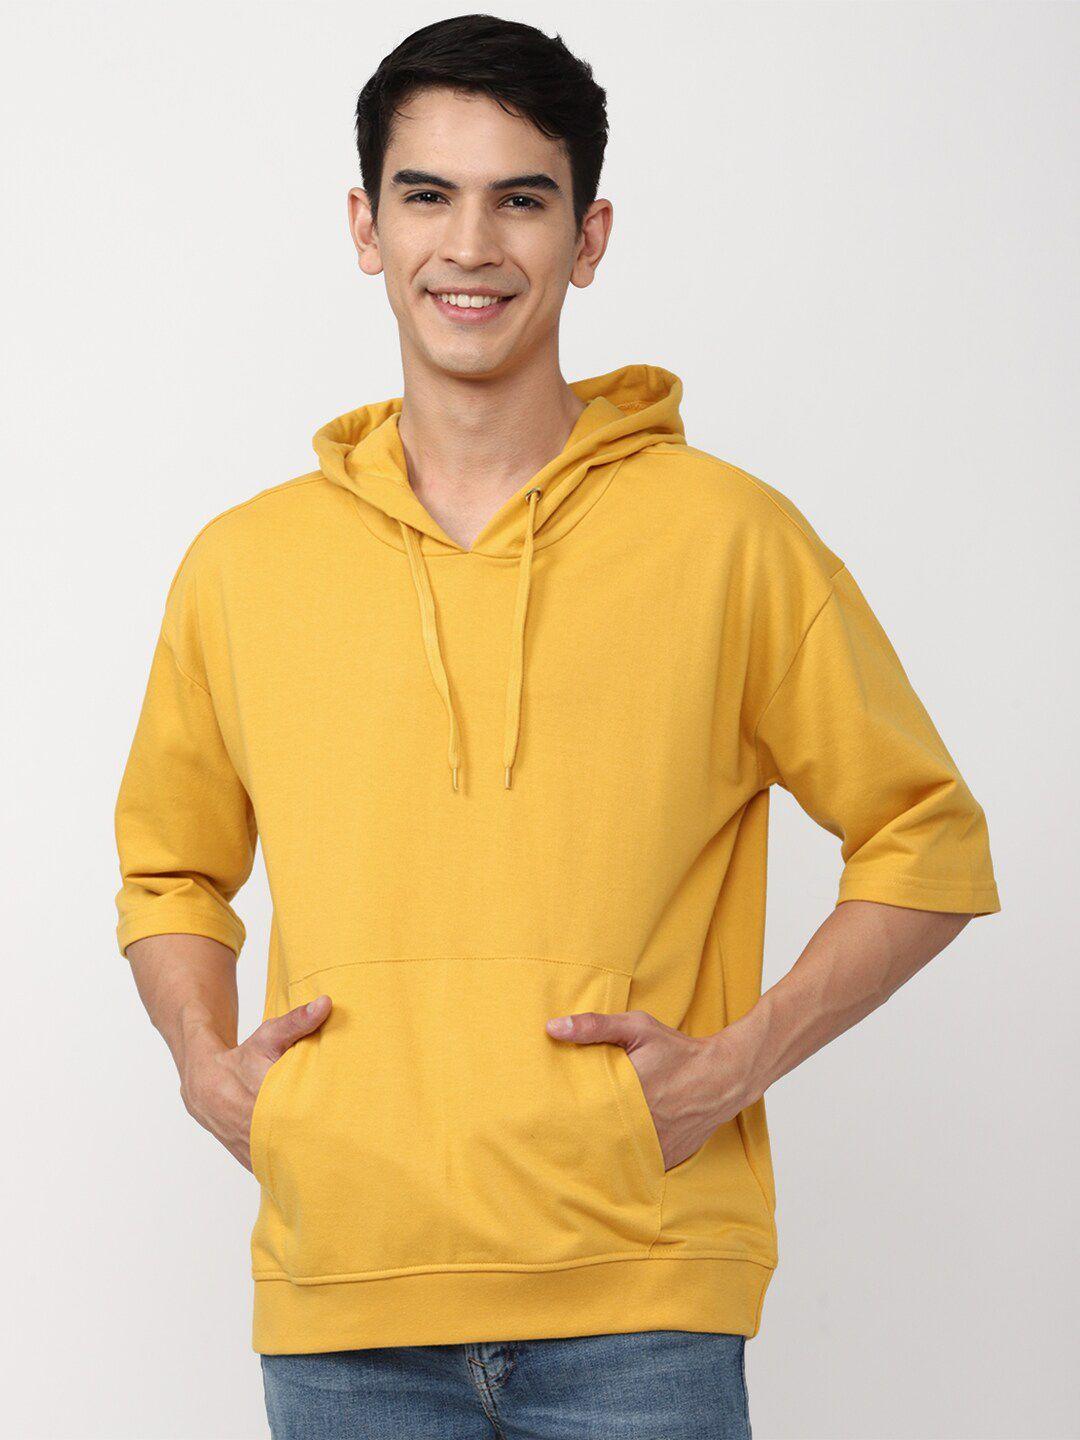 forever 21 men yellow hooded sweatshirt